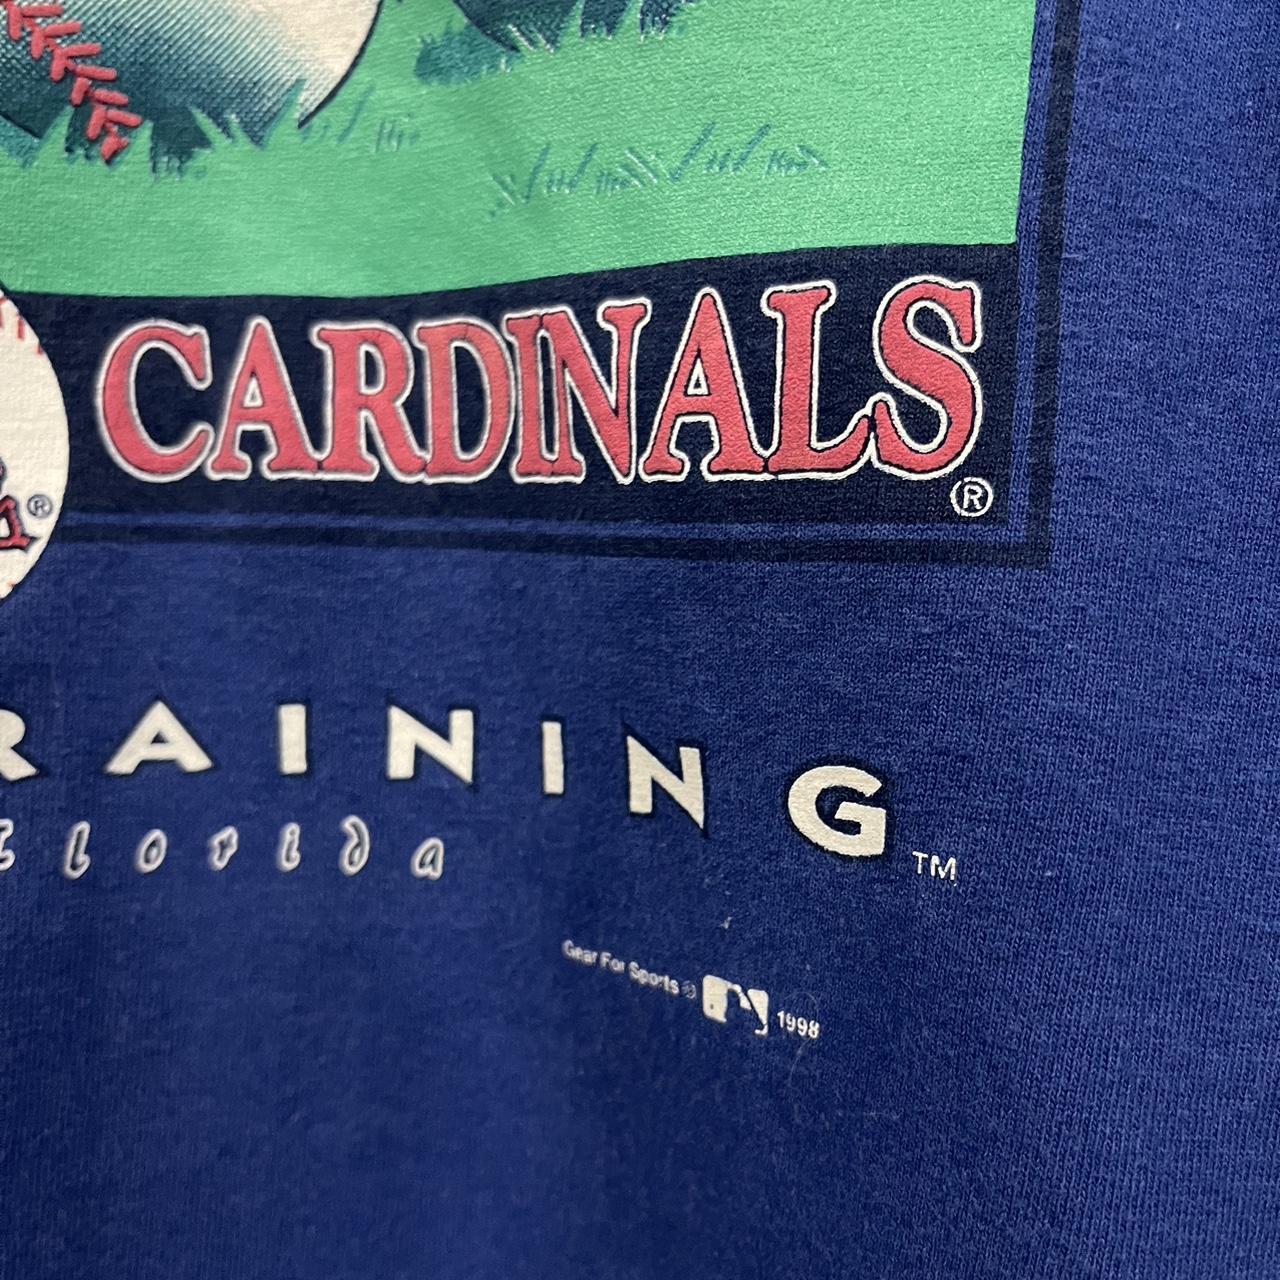 Men's Spring Training ST. Louis CARDINALS T-Shirt MLB Jupiter FL Red M